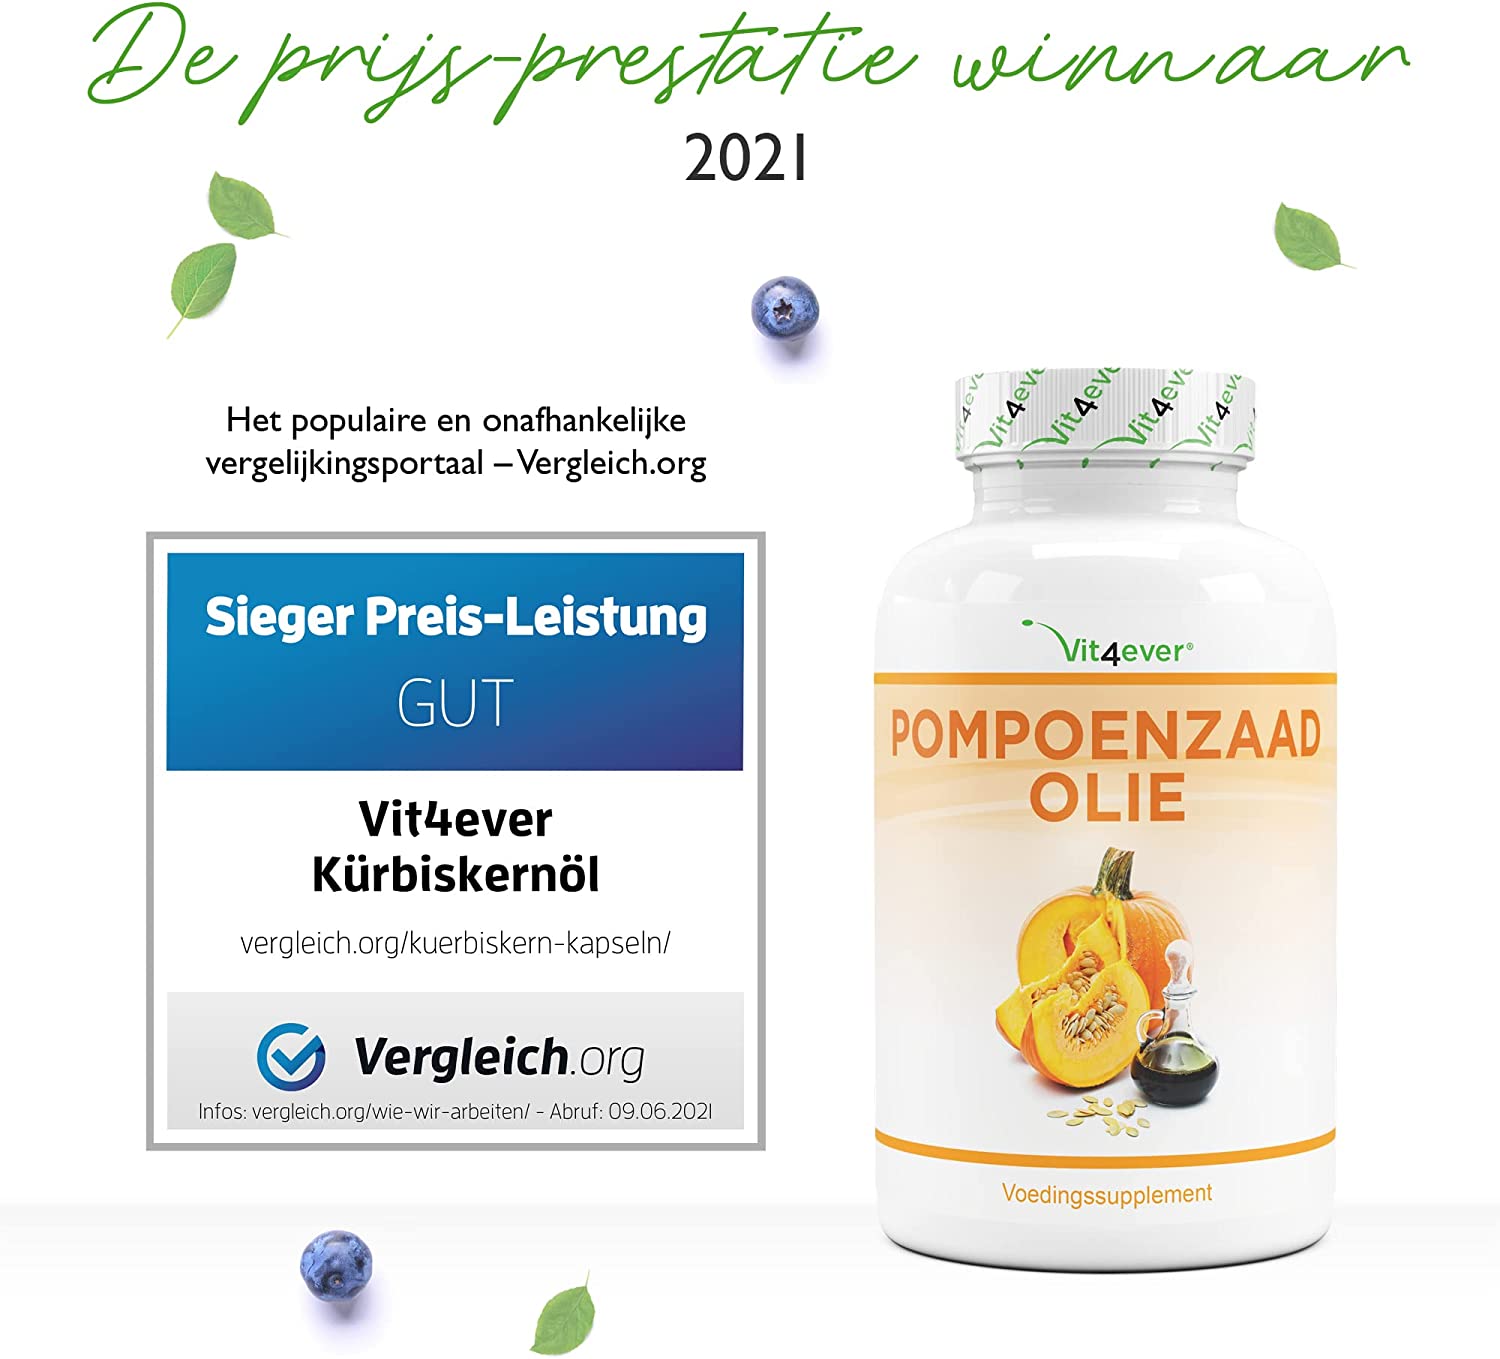 Pompoenpitoliecapsules | 420 capsules | 3000 mg pompoenpitolie | Vit4ever